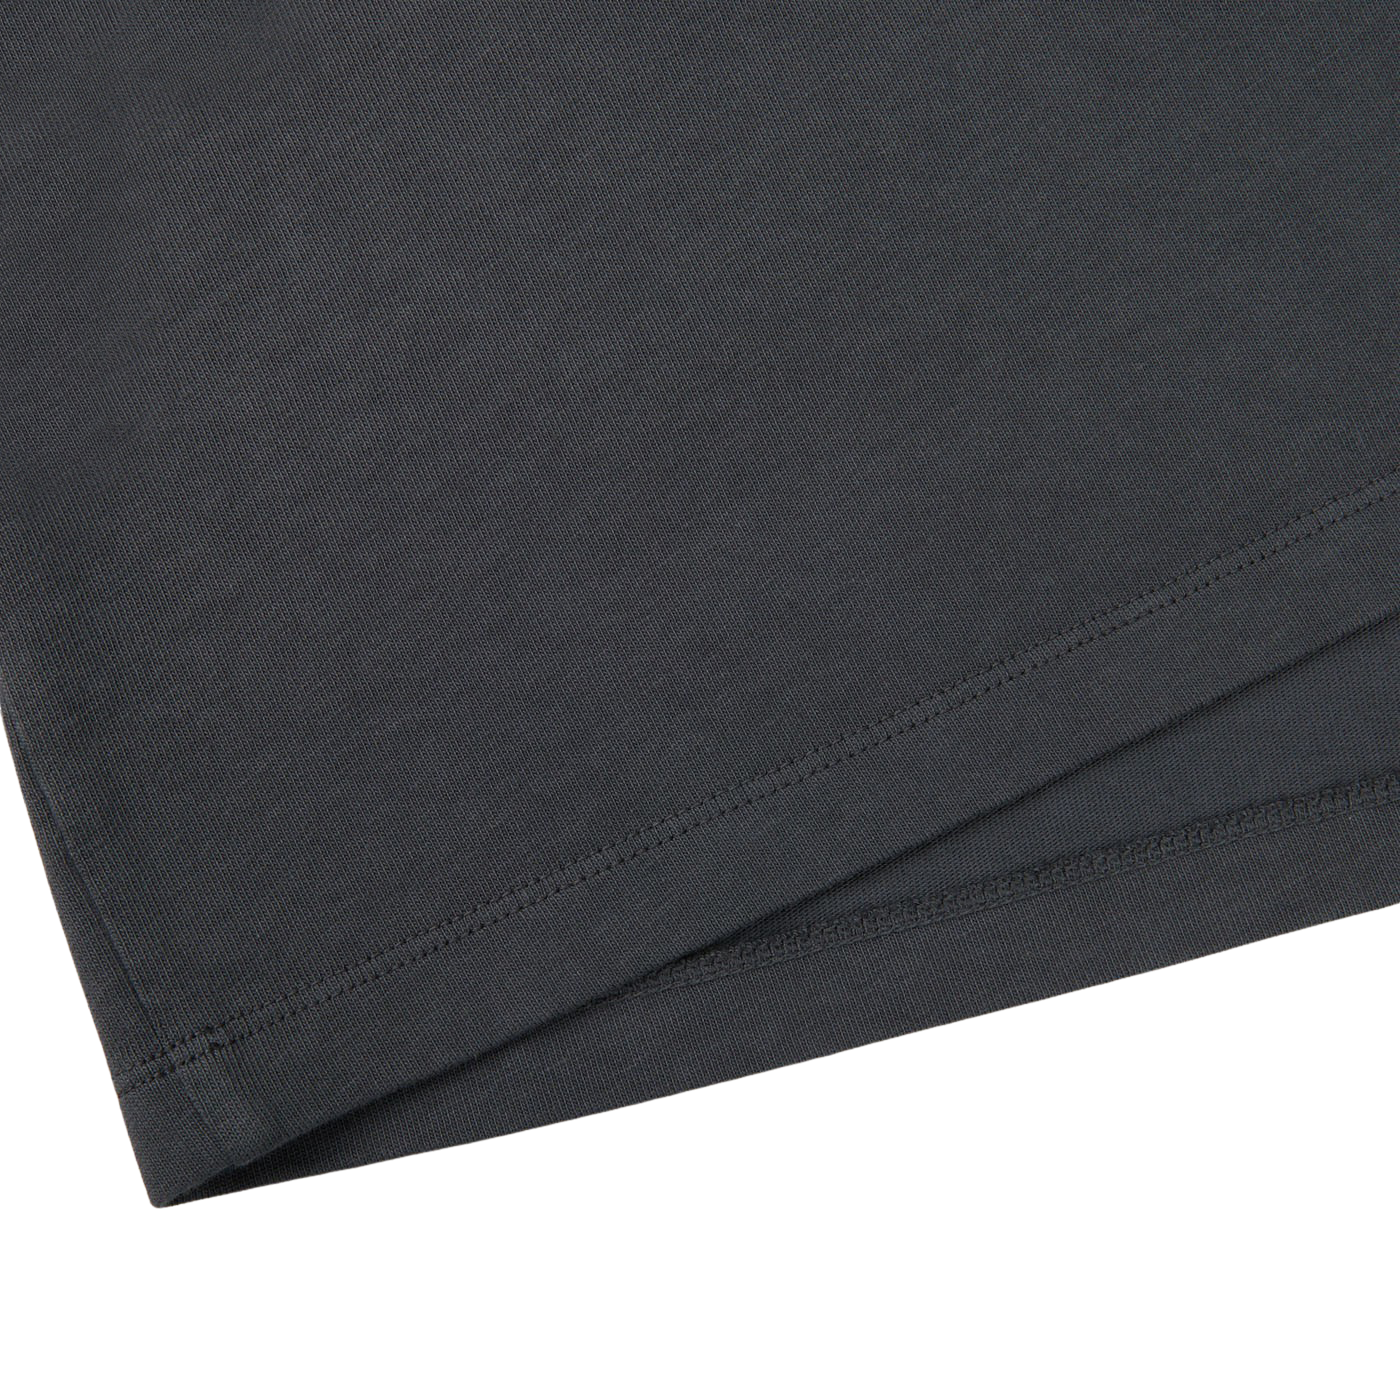 A close up of a black Asphalt Grey Cotton LS T-Shirt from Italian brand, Tela Genova.